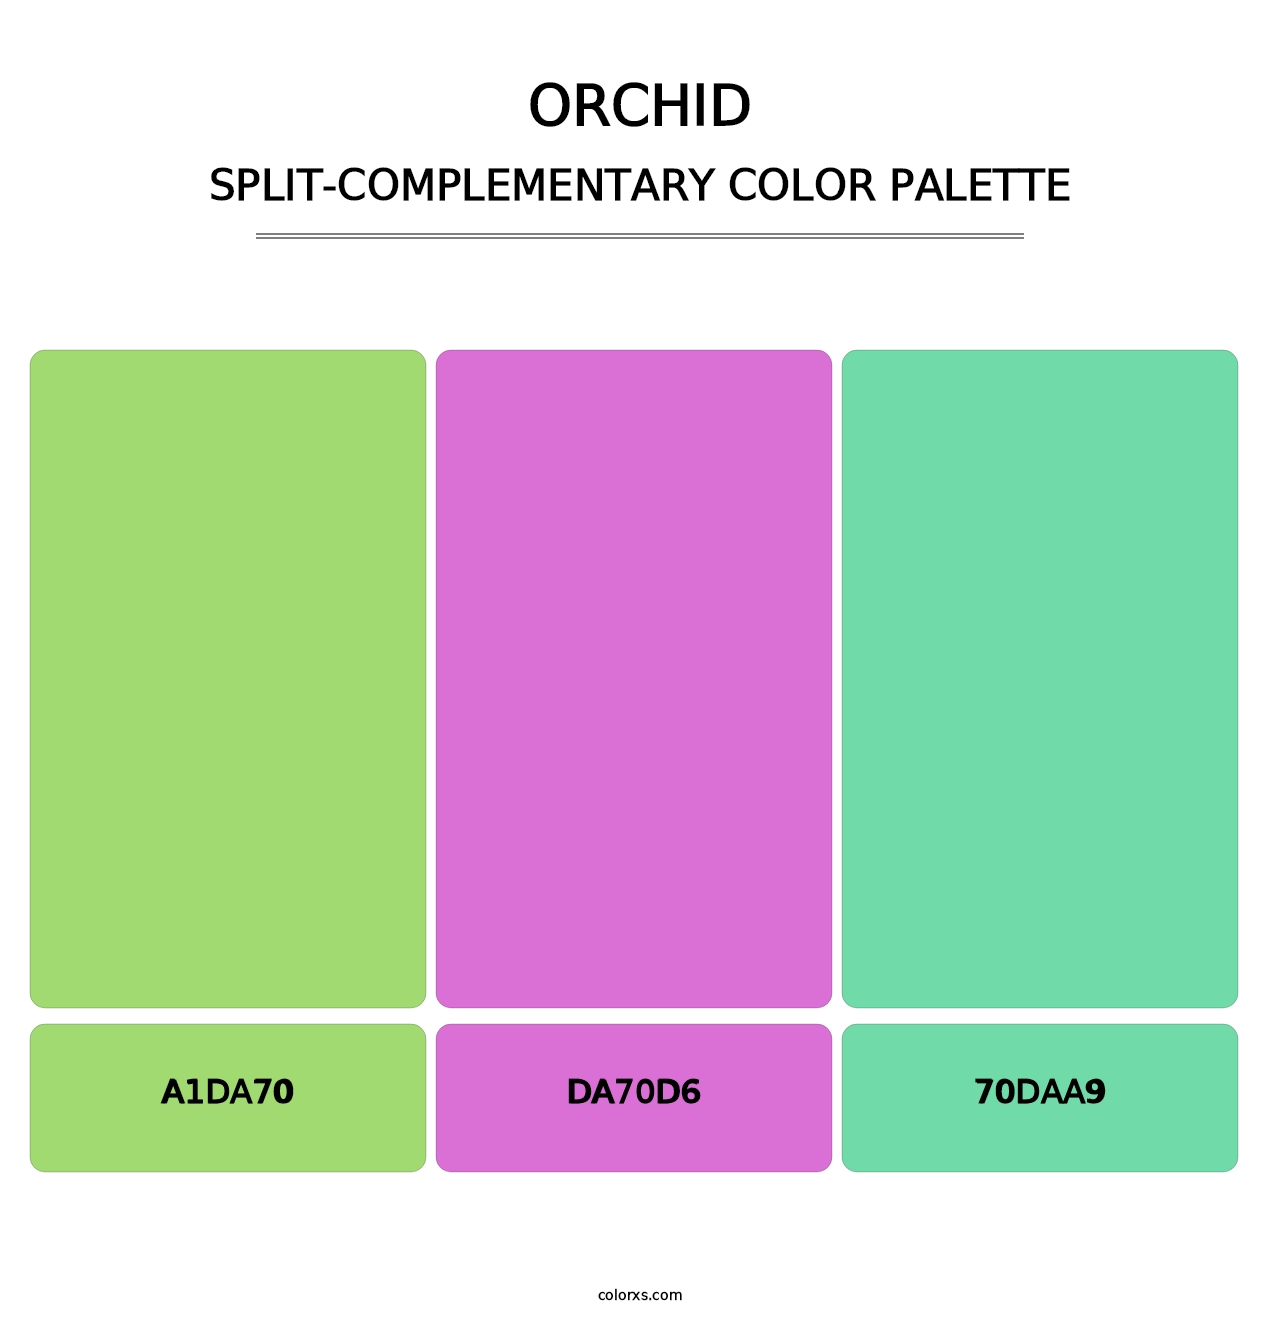 Orchid - Split-Complementary Color Palette